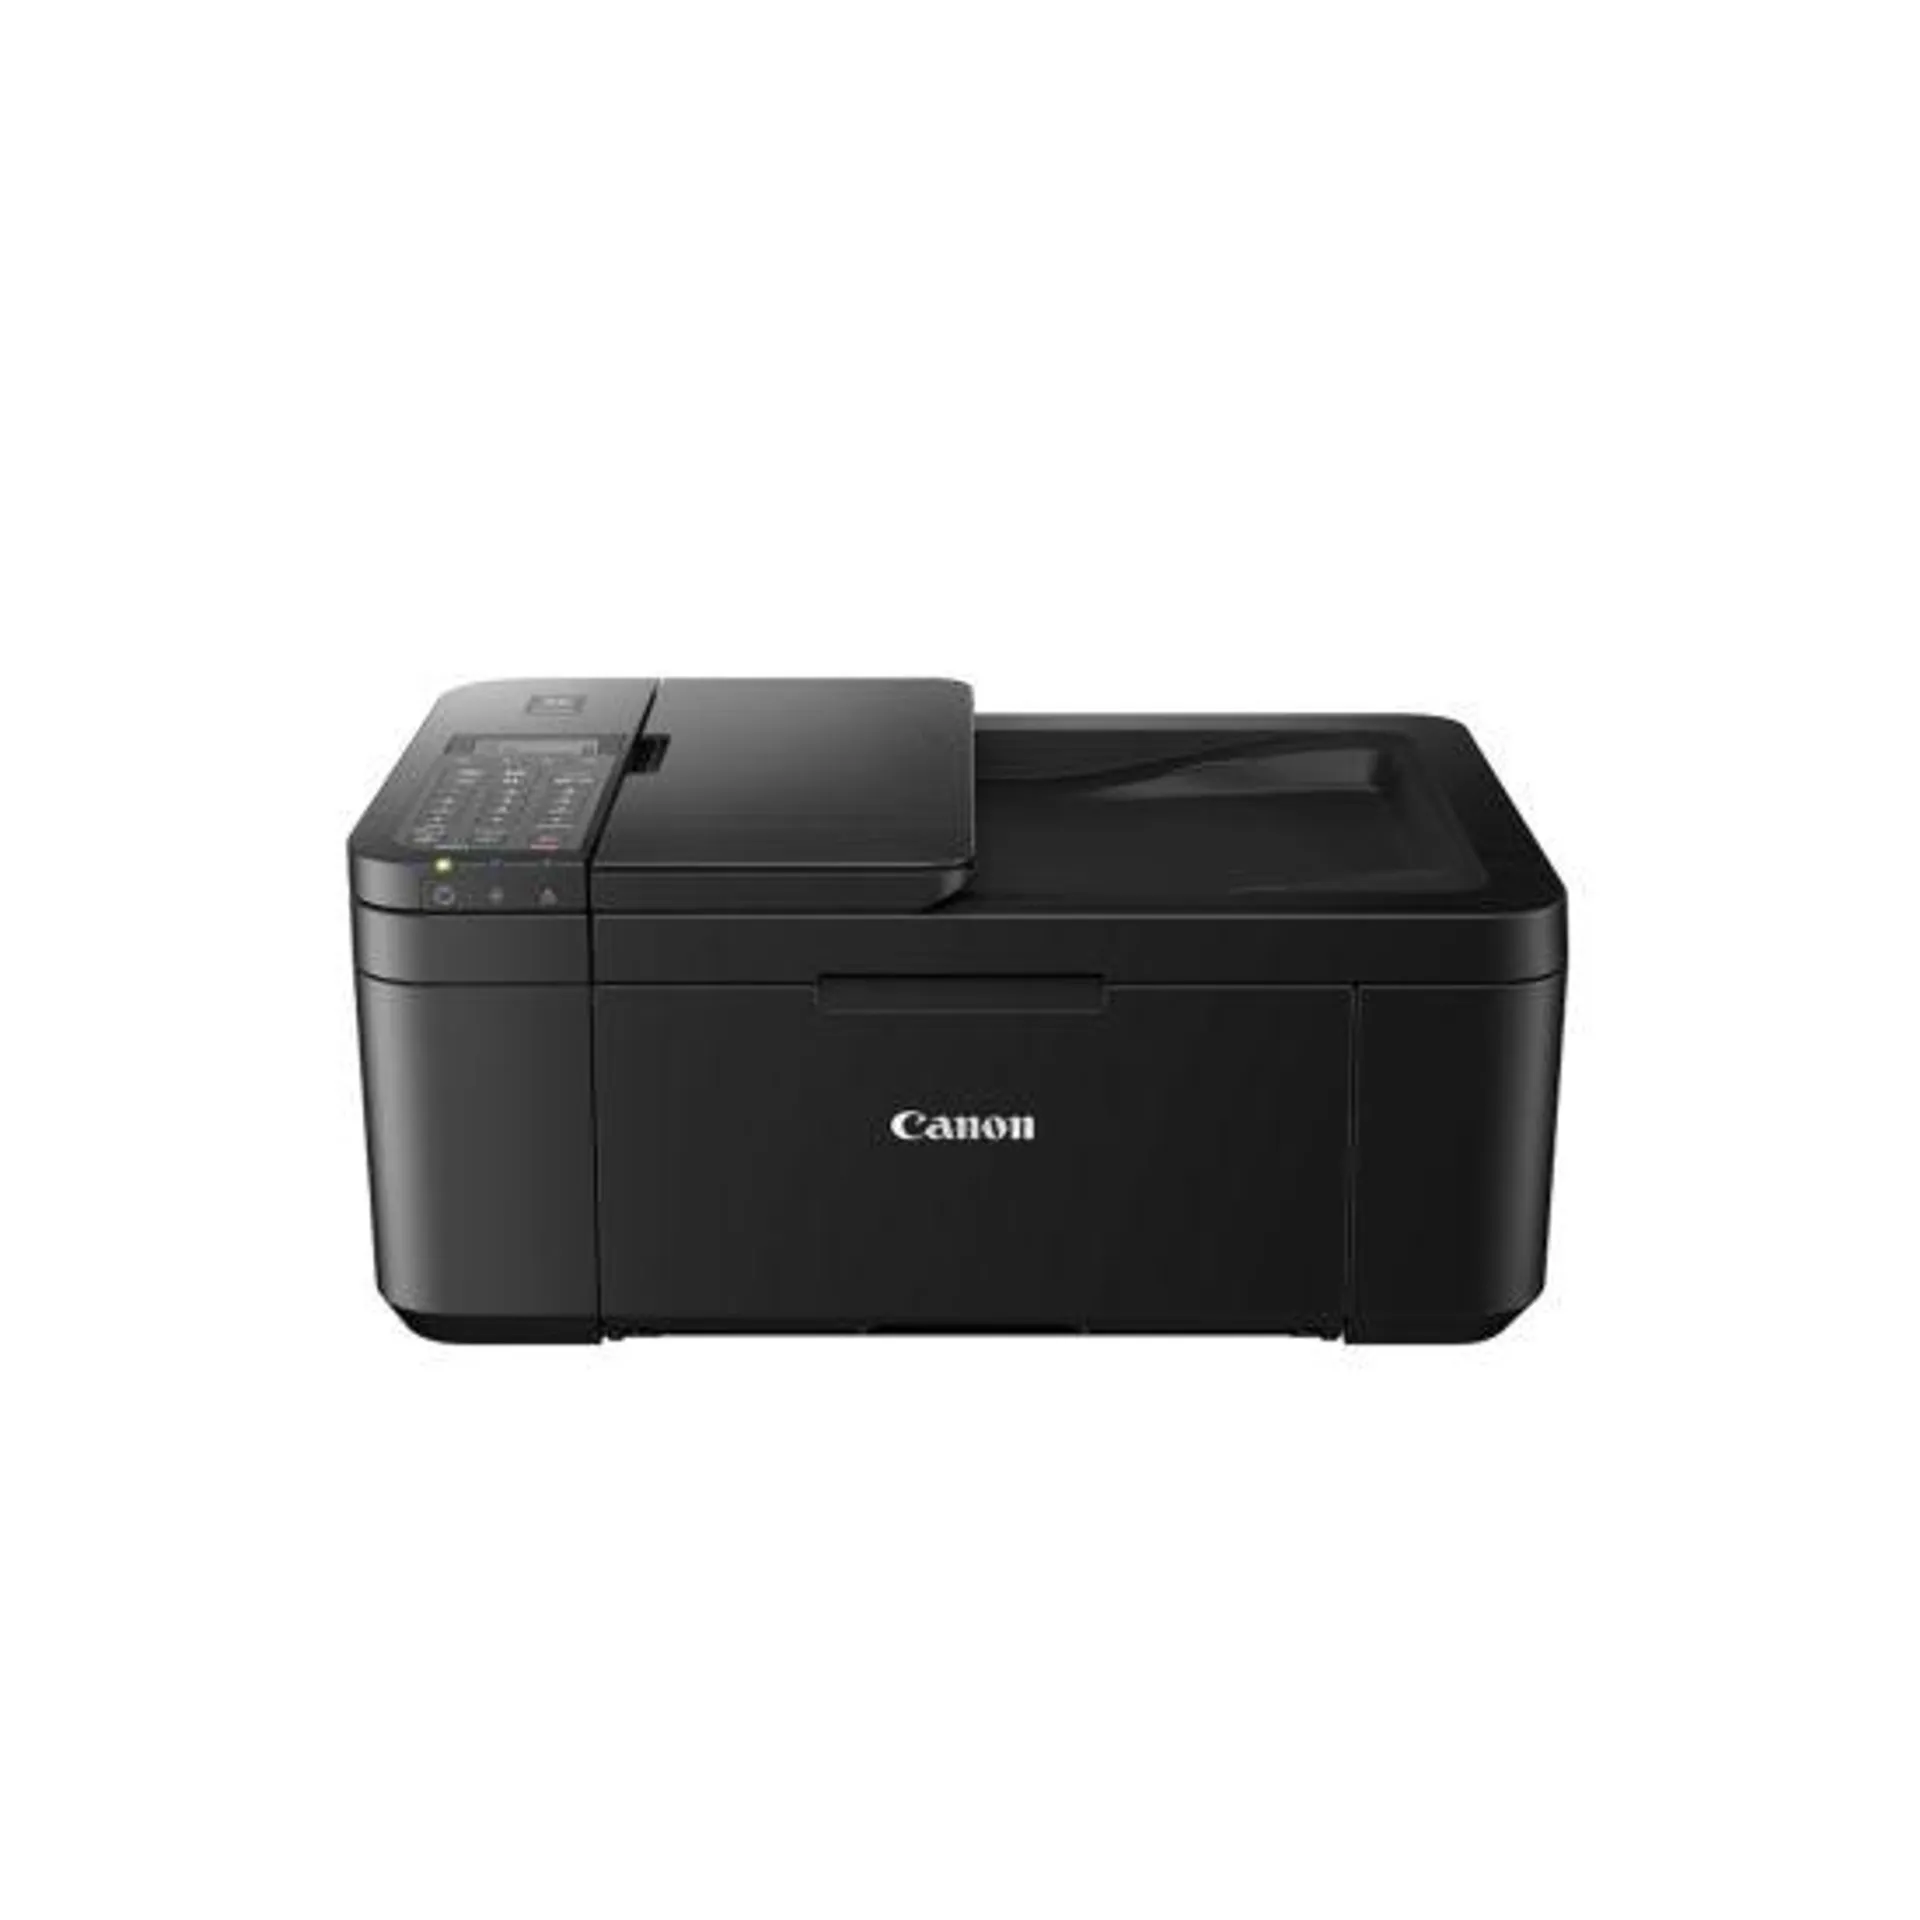 Canon PIXMA TR4650 All in One Wireless Printer with Fax